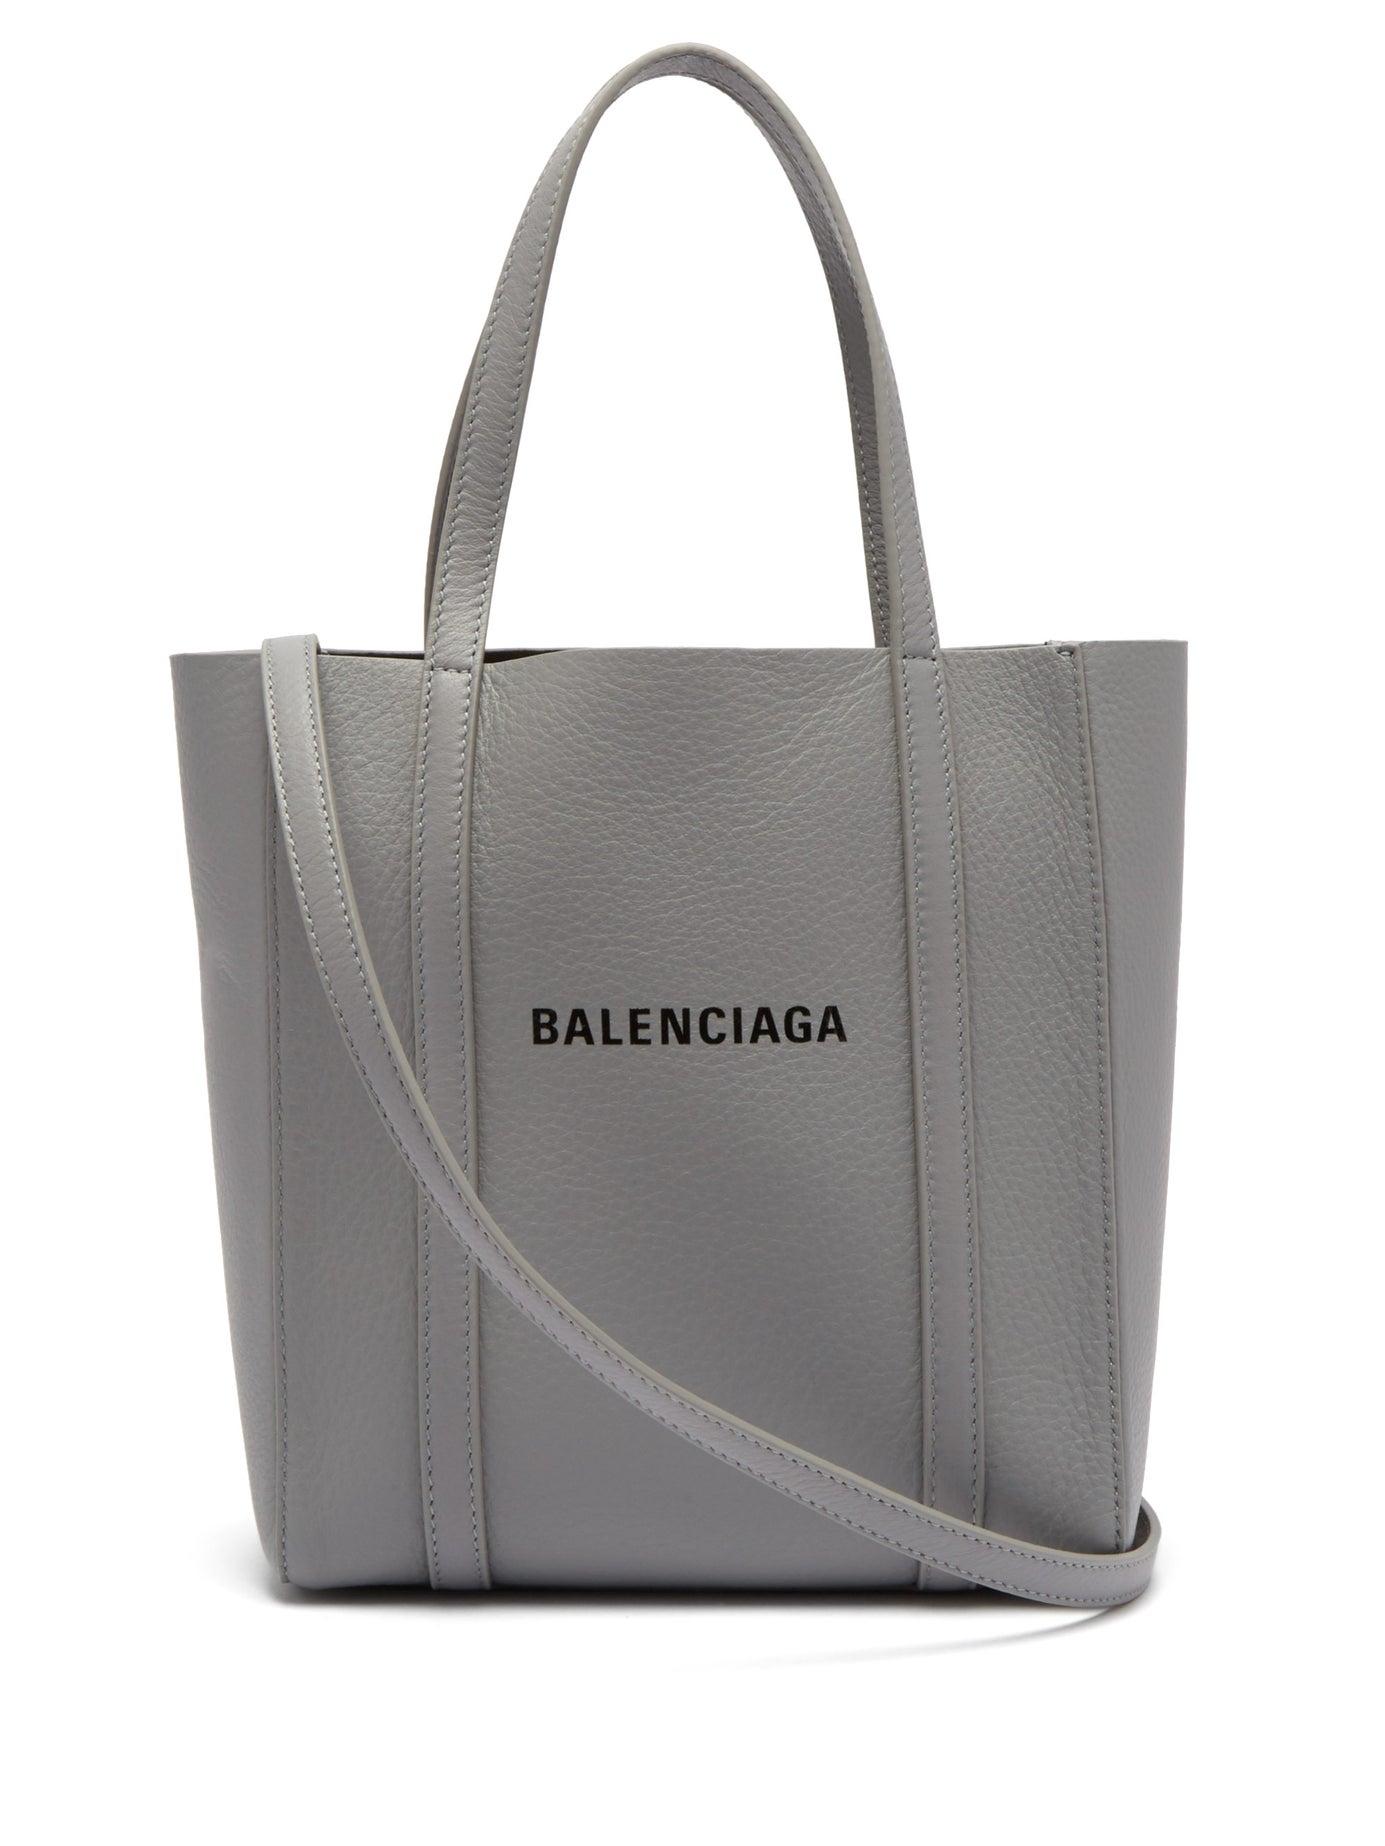 Balenciaga Leather Everyday Tote Xxs in Grey (Gray) - Lyst